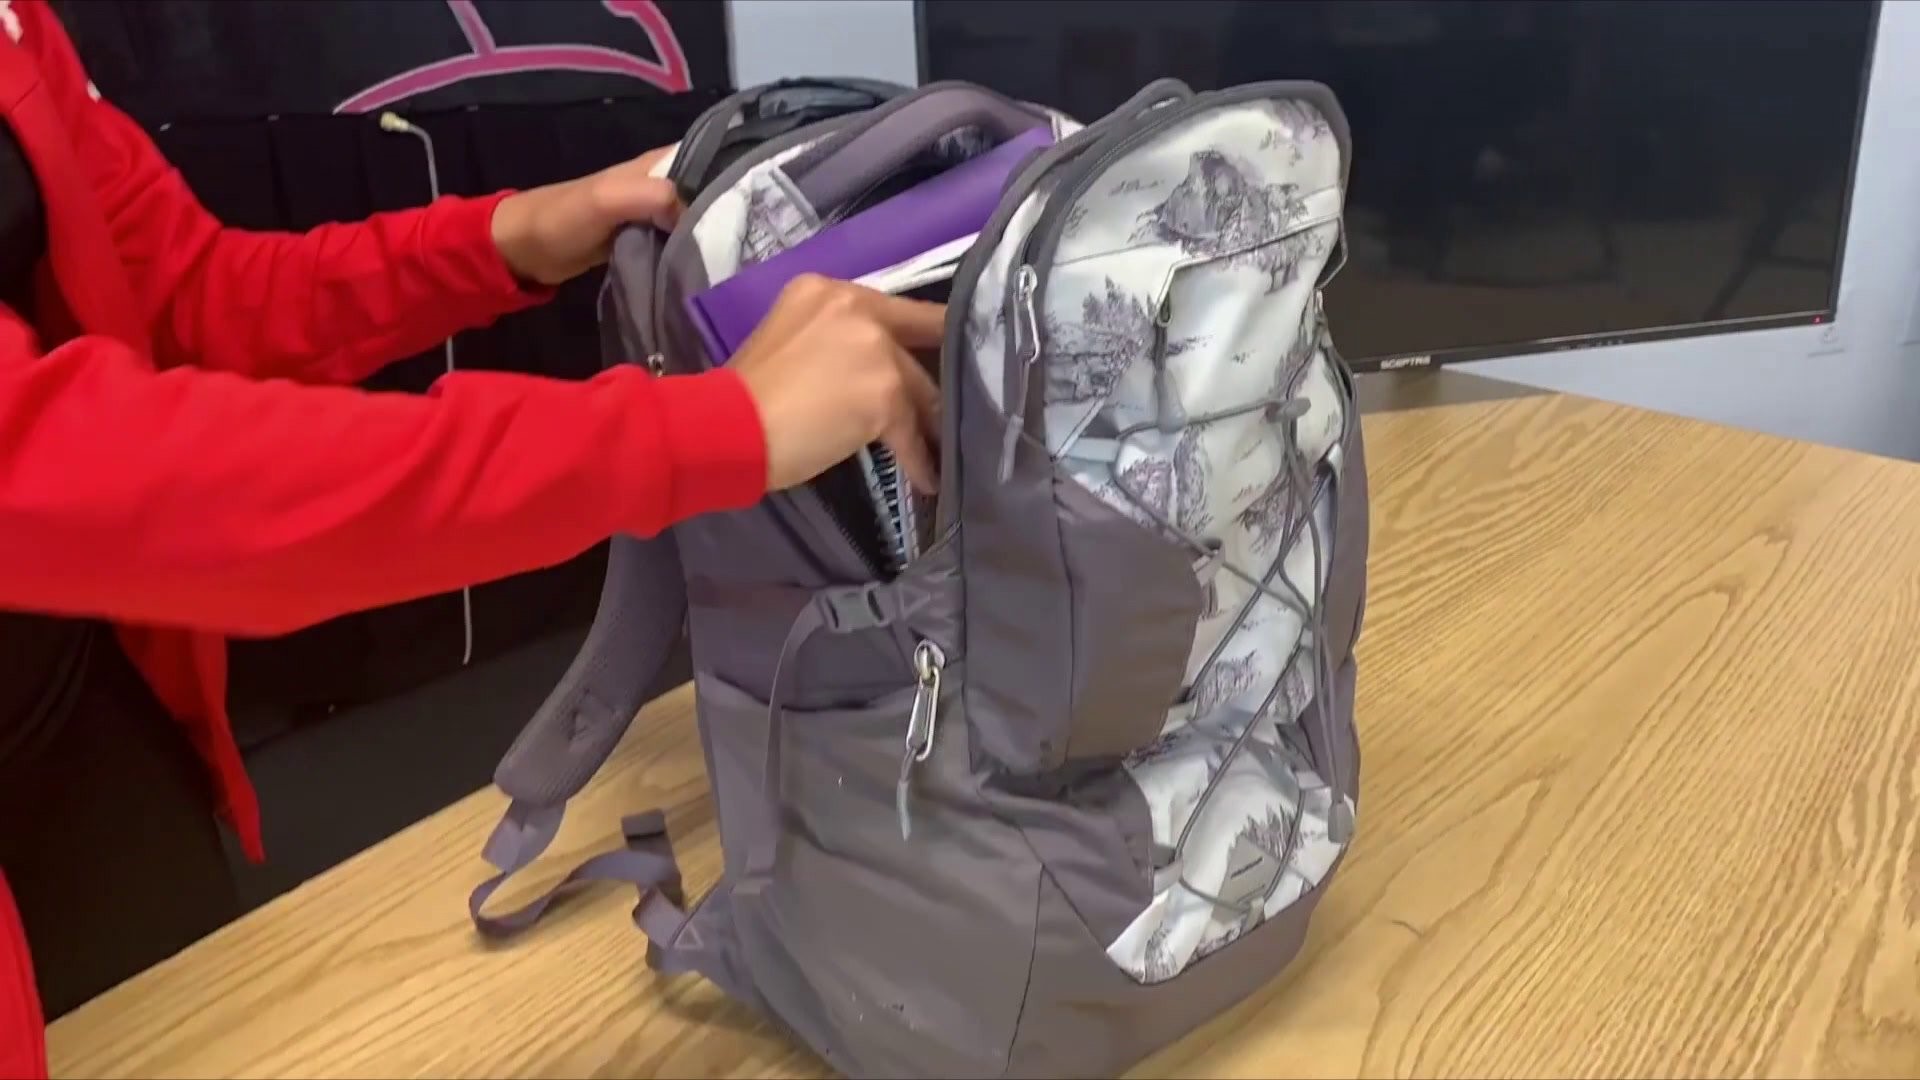 FOX61 Student News: Backpack Burden